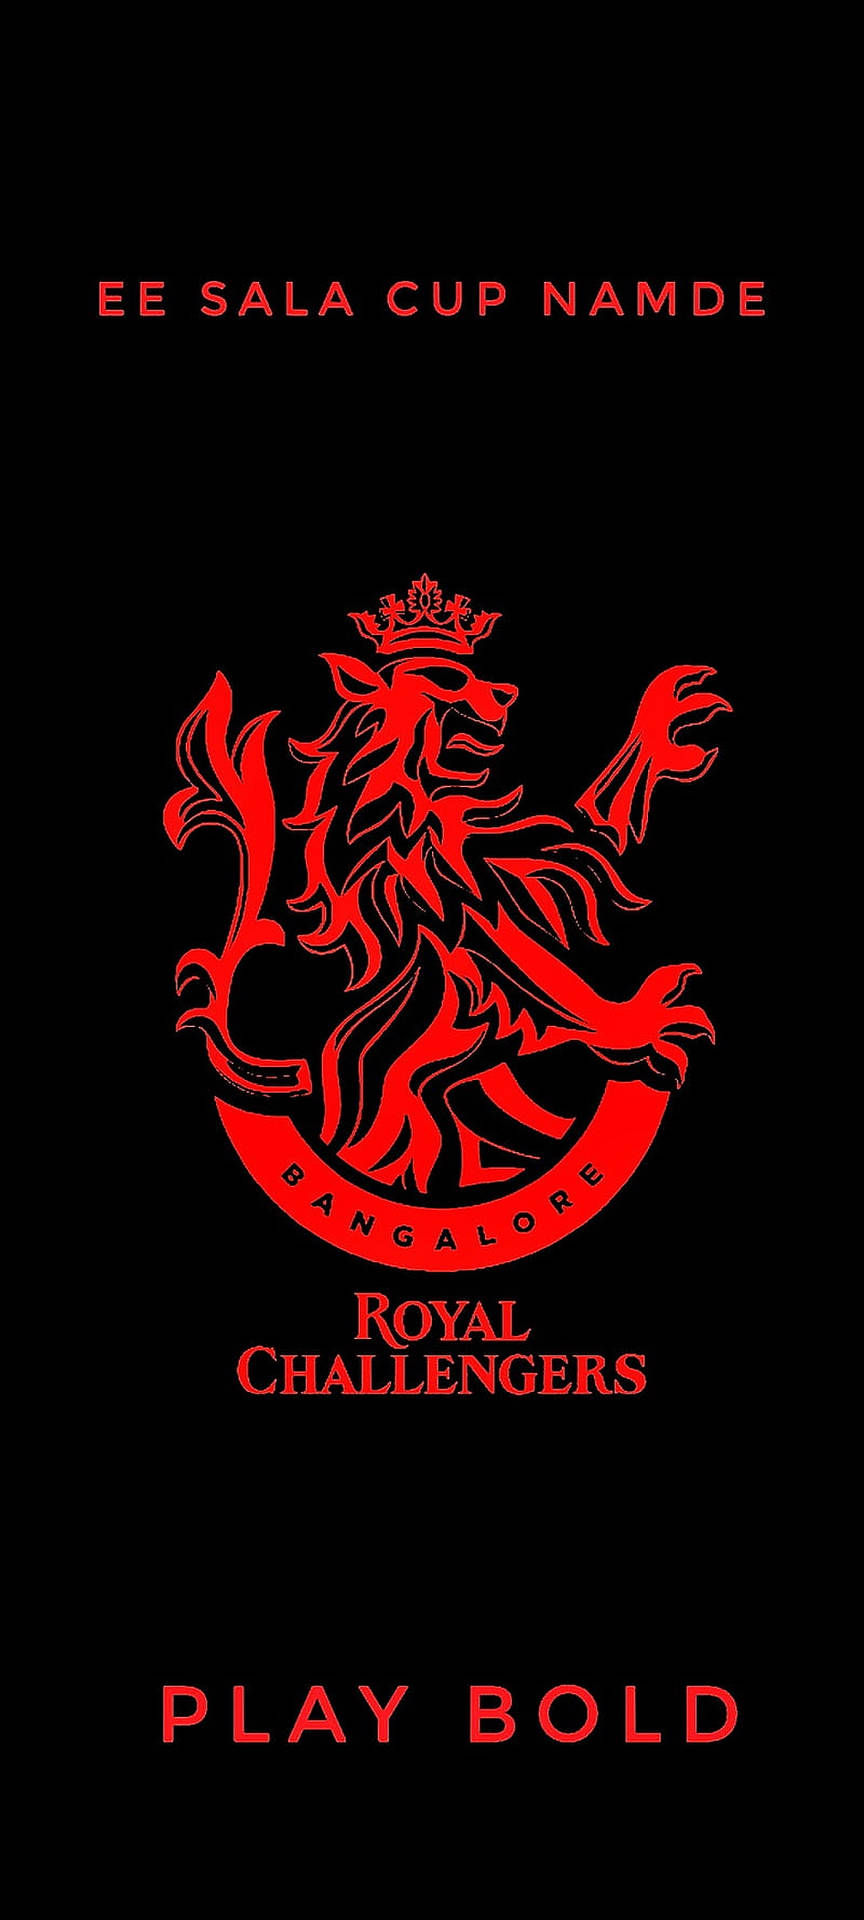 Royal Challengers Bangalore Ee Sala Cup Namde Background